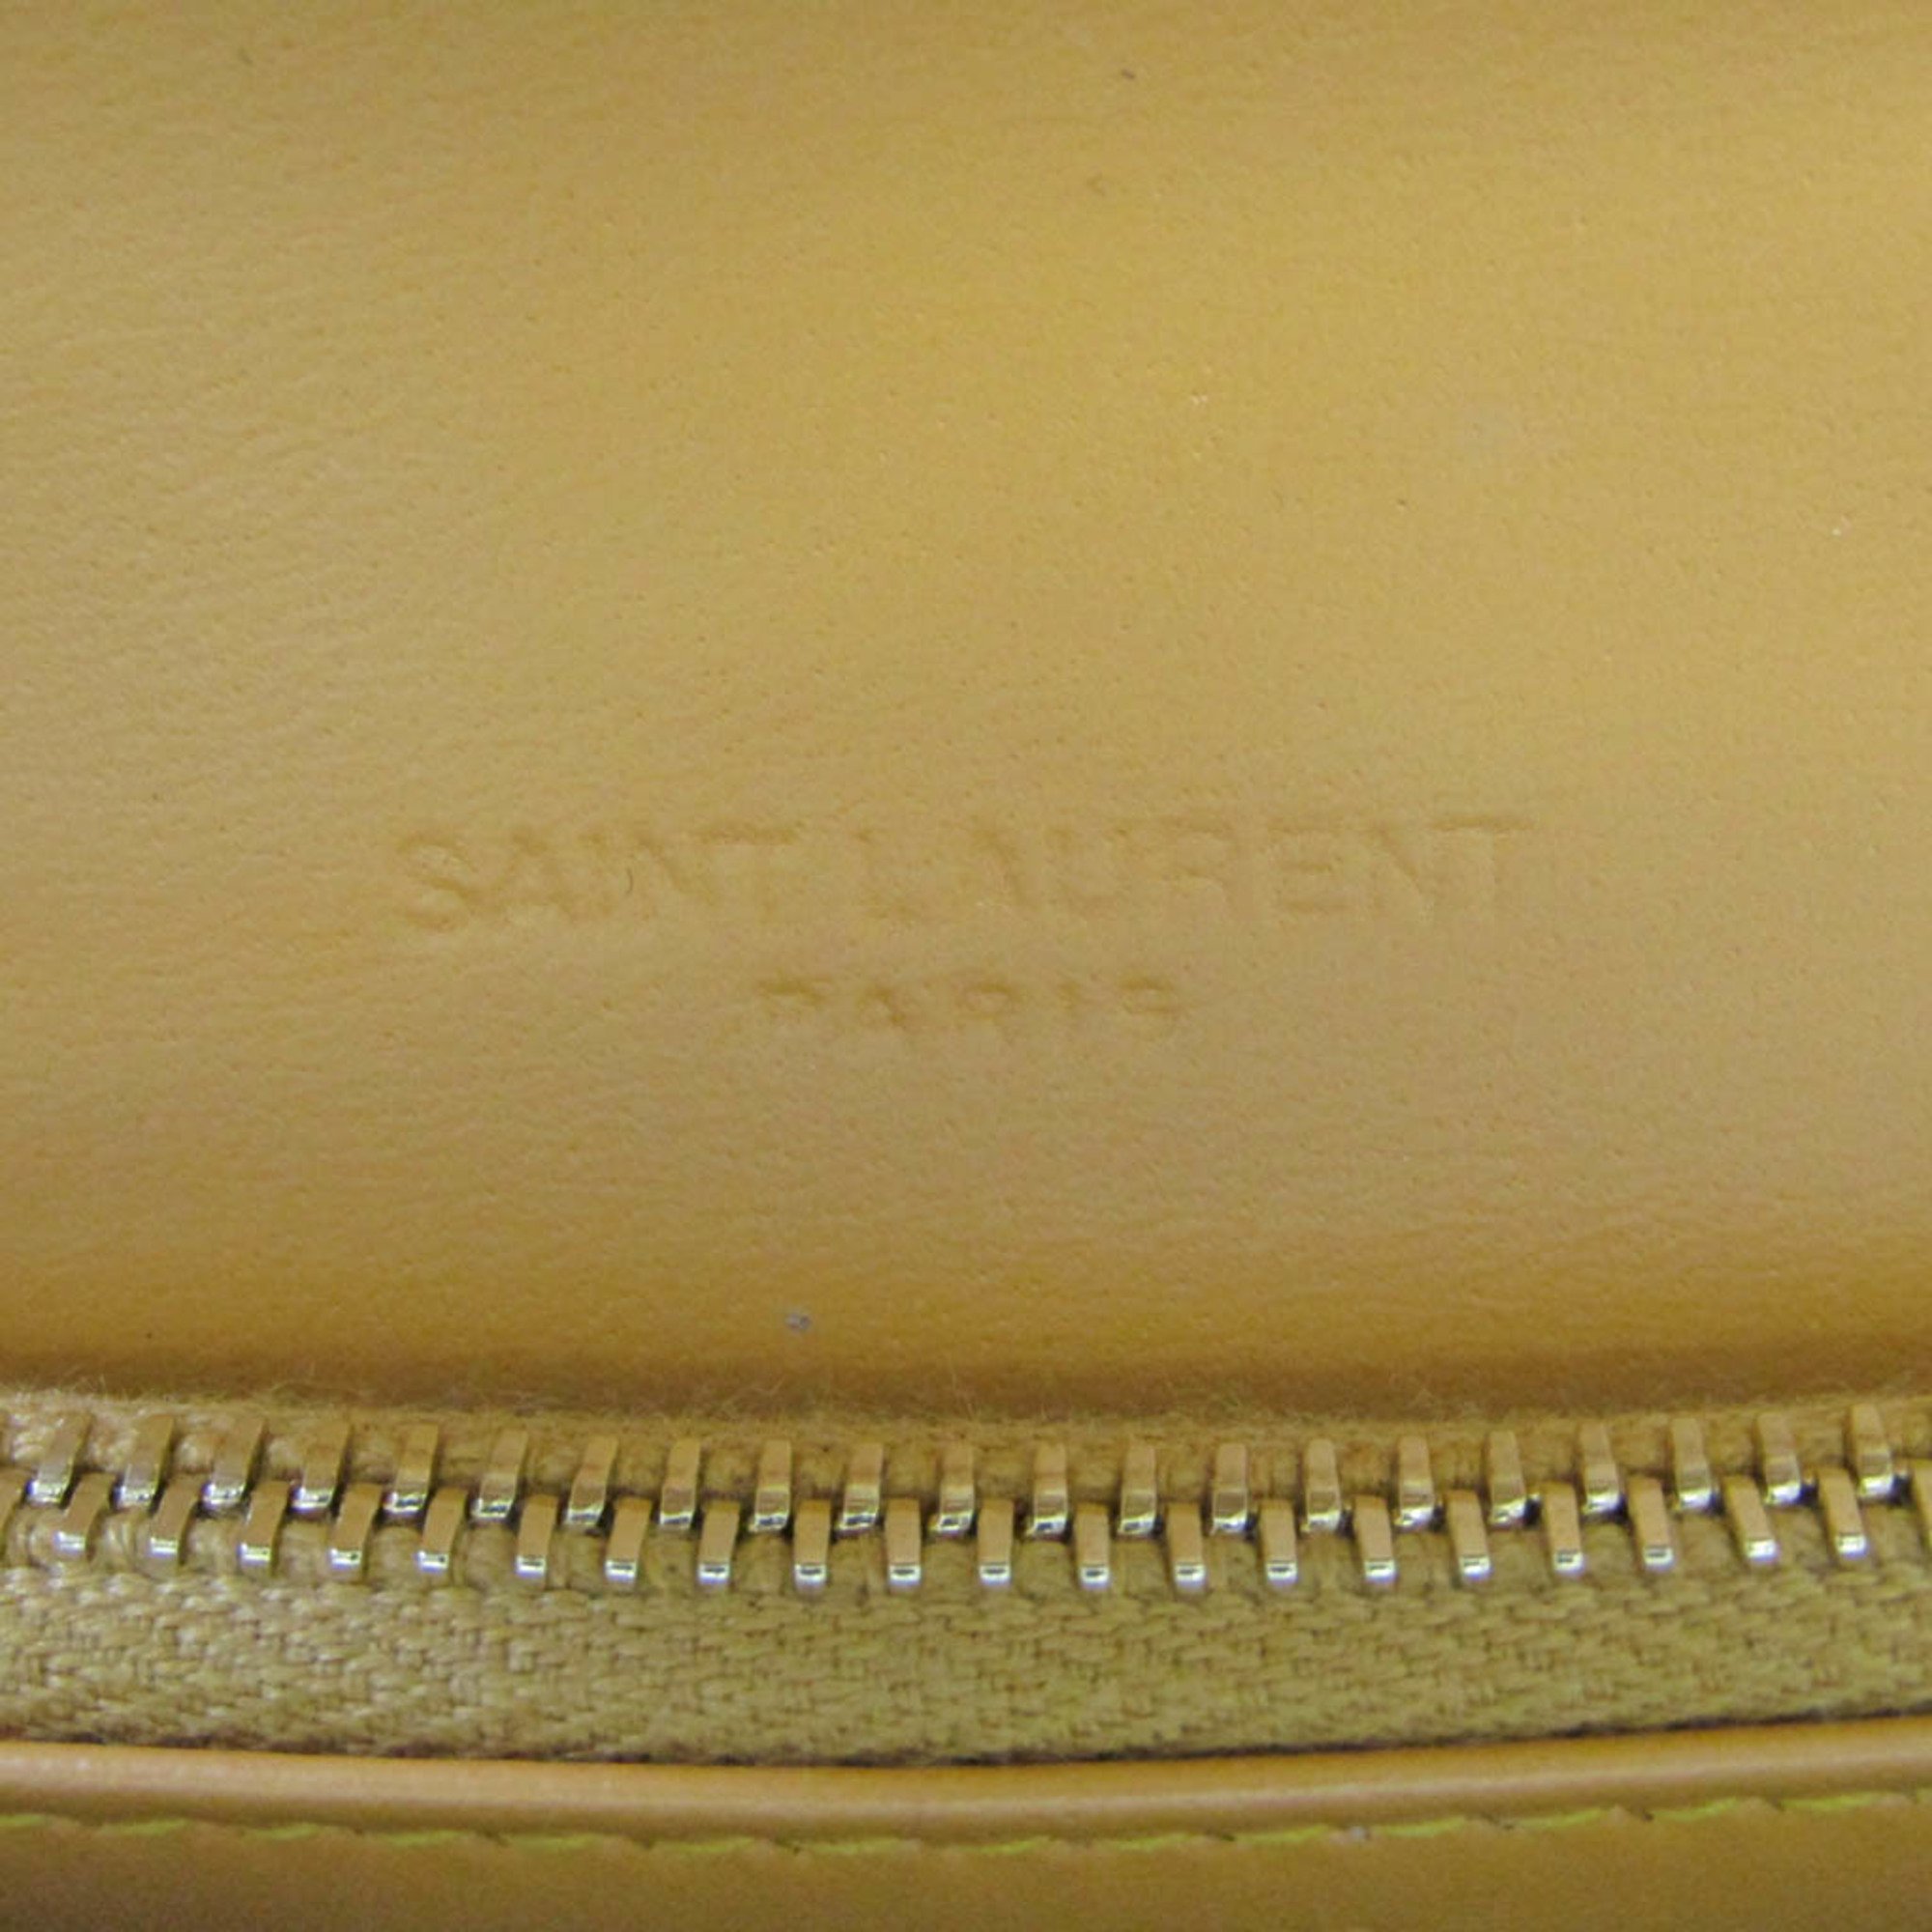 Saint Laurent 635219 Women's Leather Chain/Shoulder Wallet Beige Brown